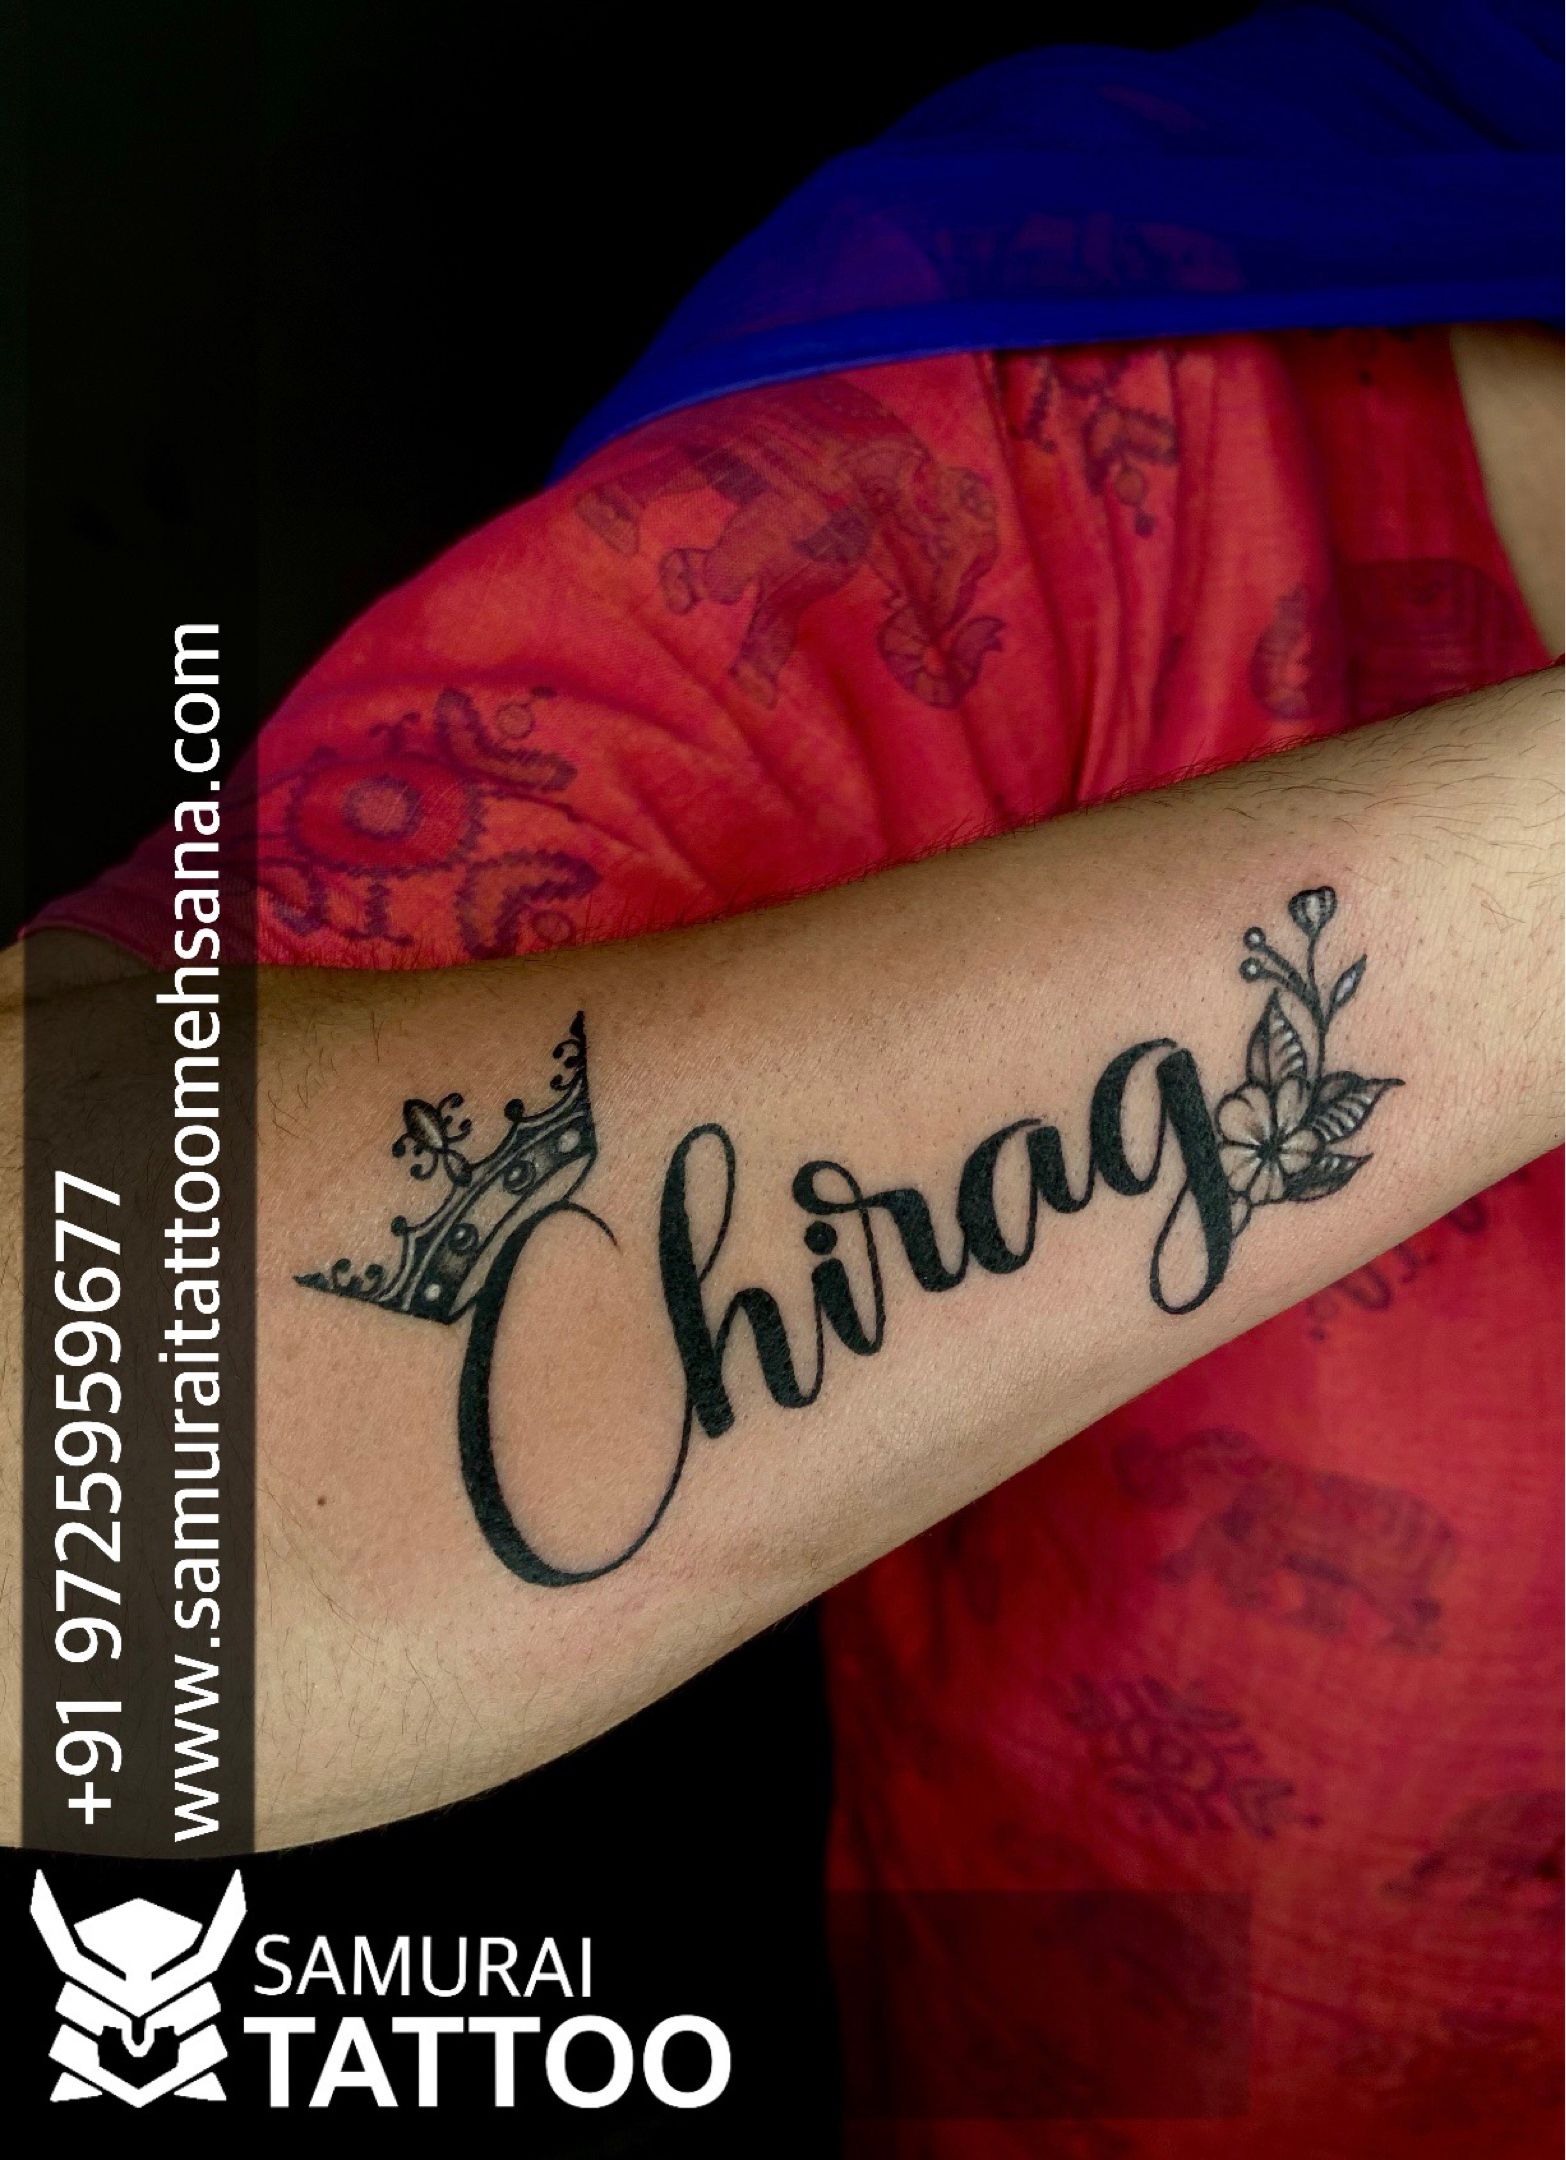 Share 83 about diwakar name tattoo unmissable  indaotaonec